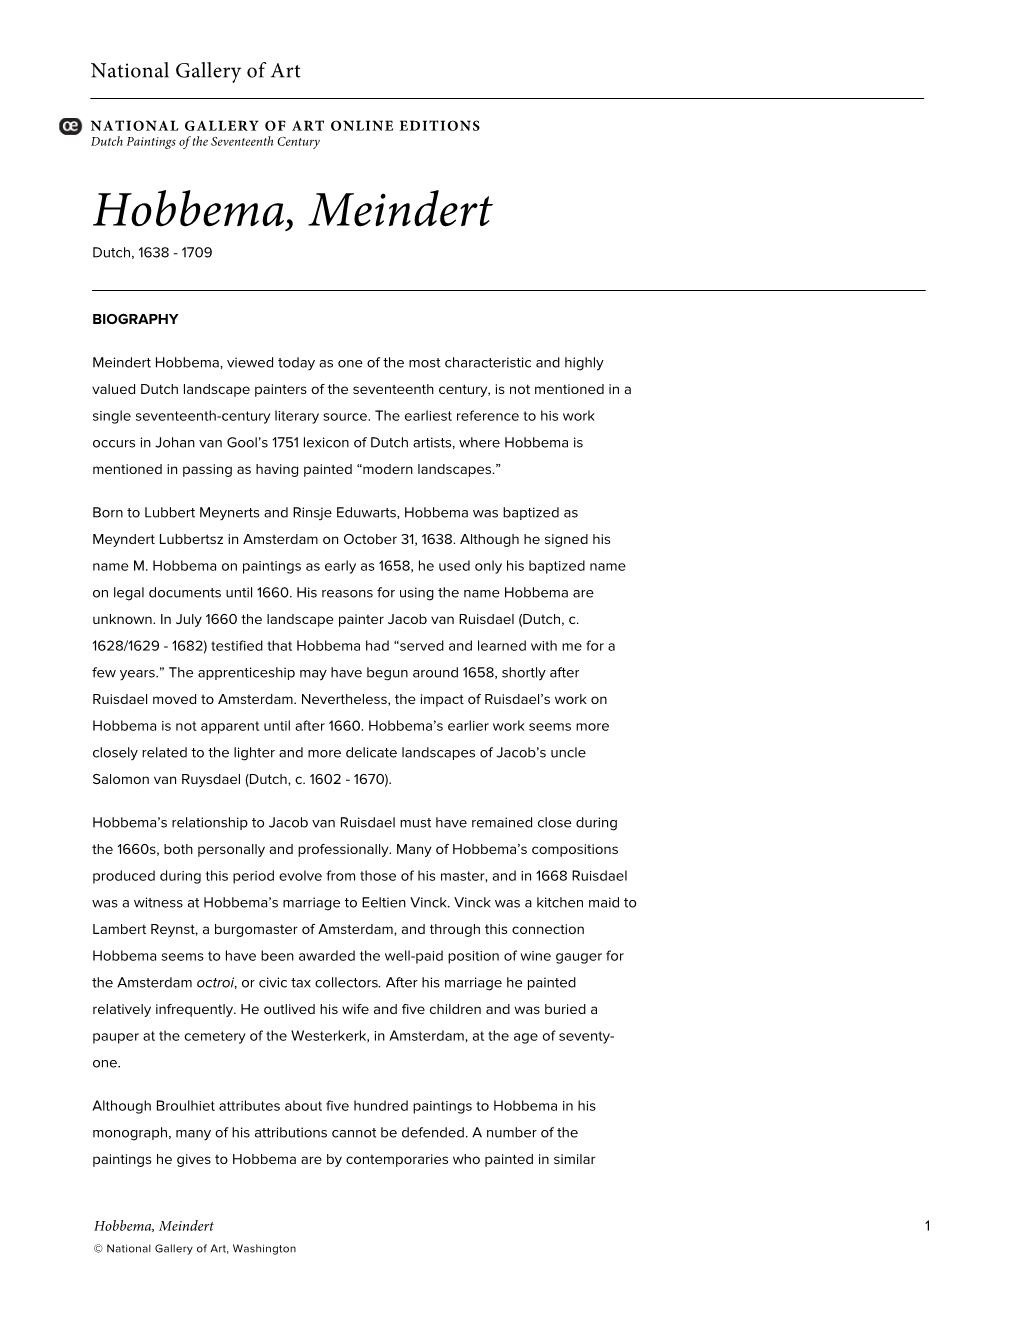 Hobbema, Meindert Dutch, 1638 - 1709